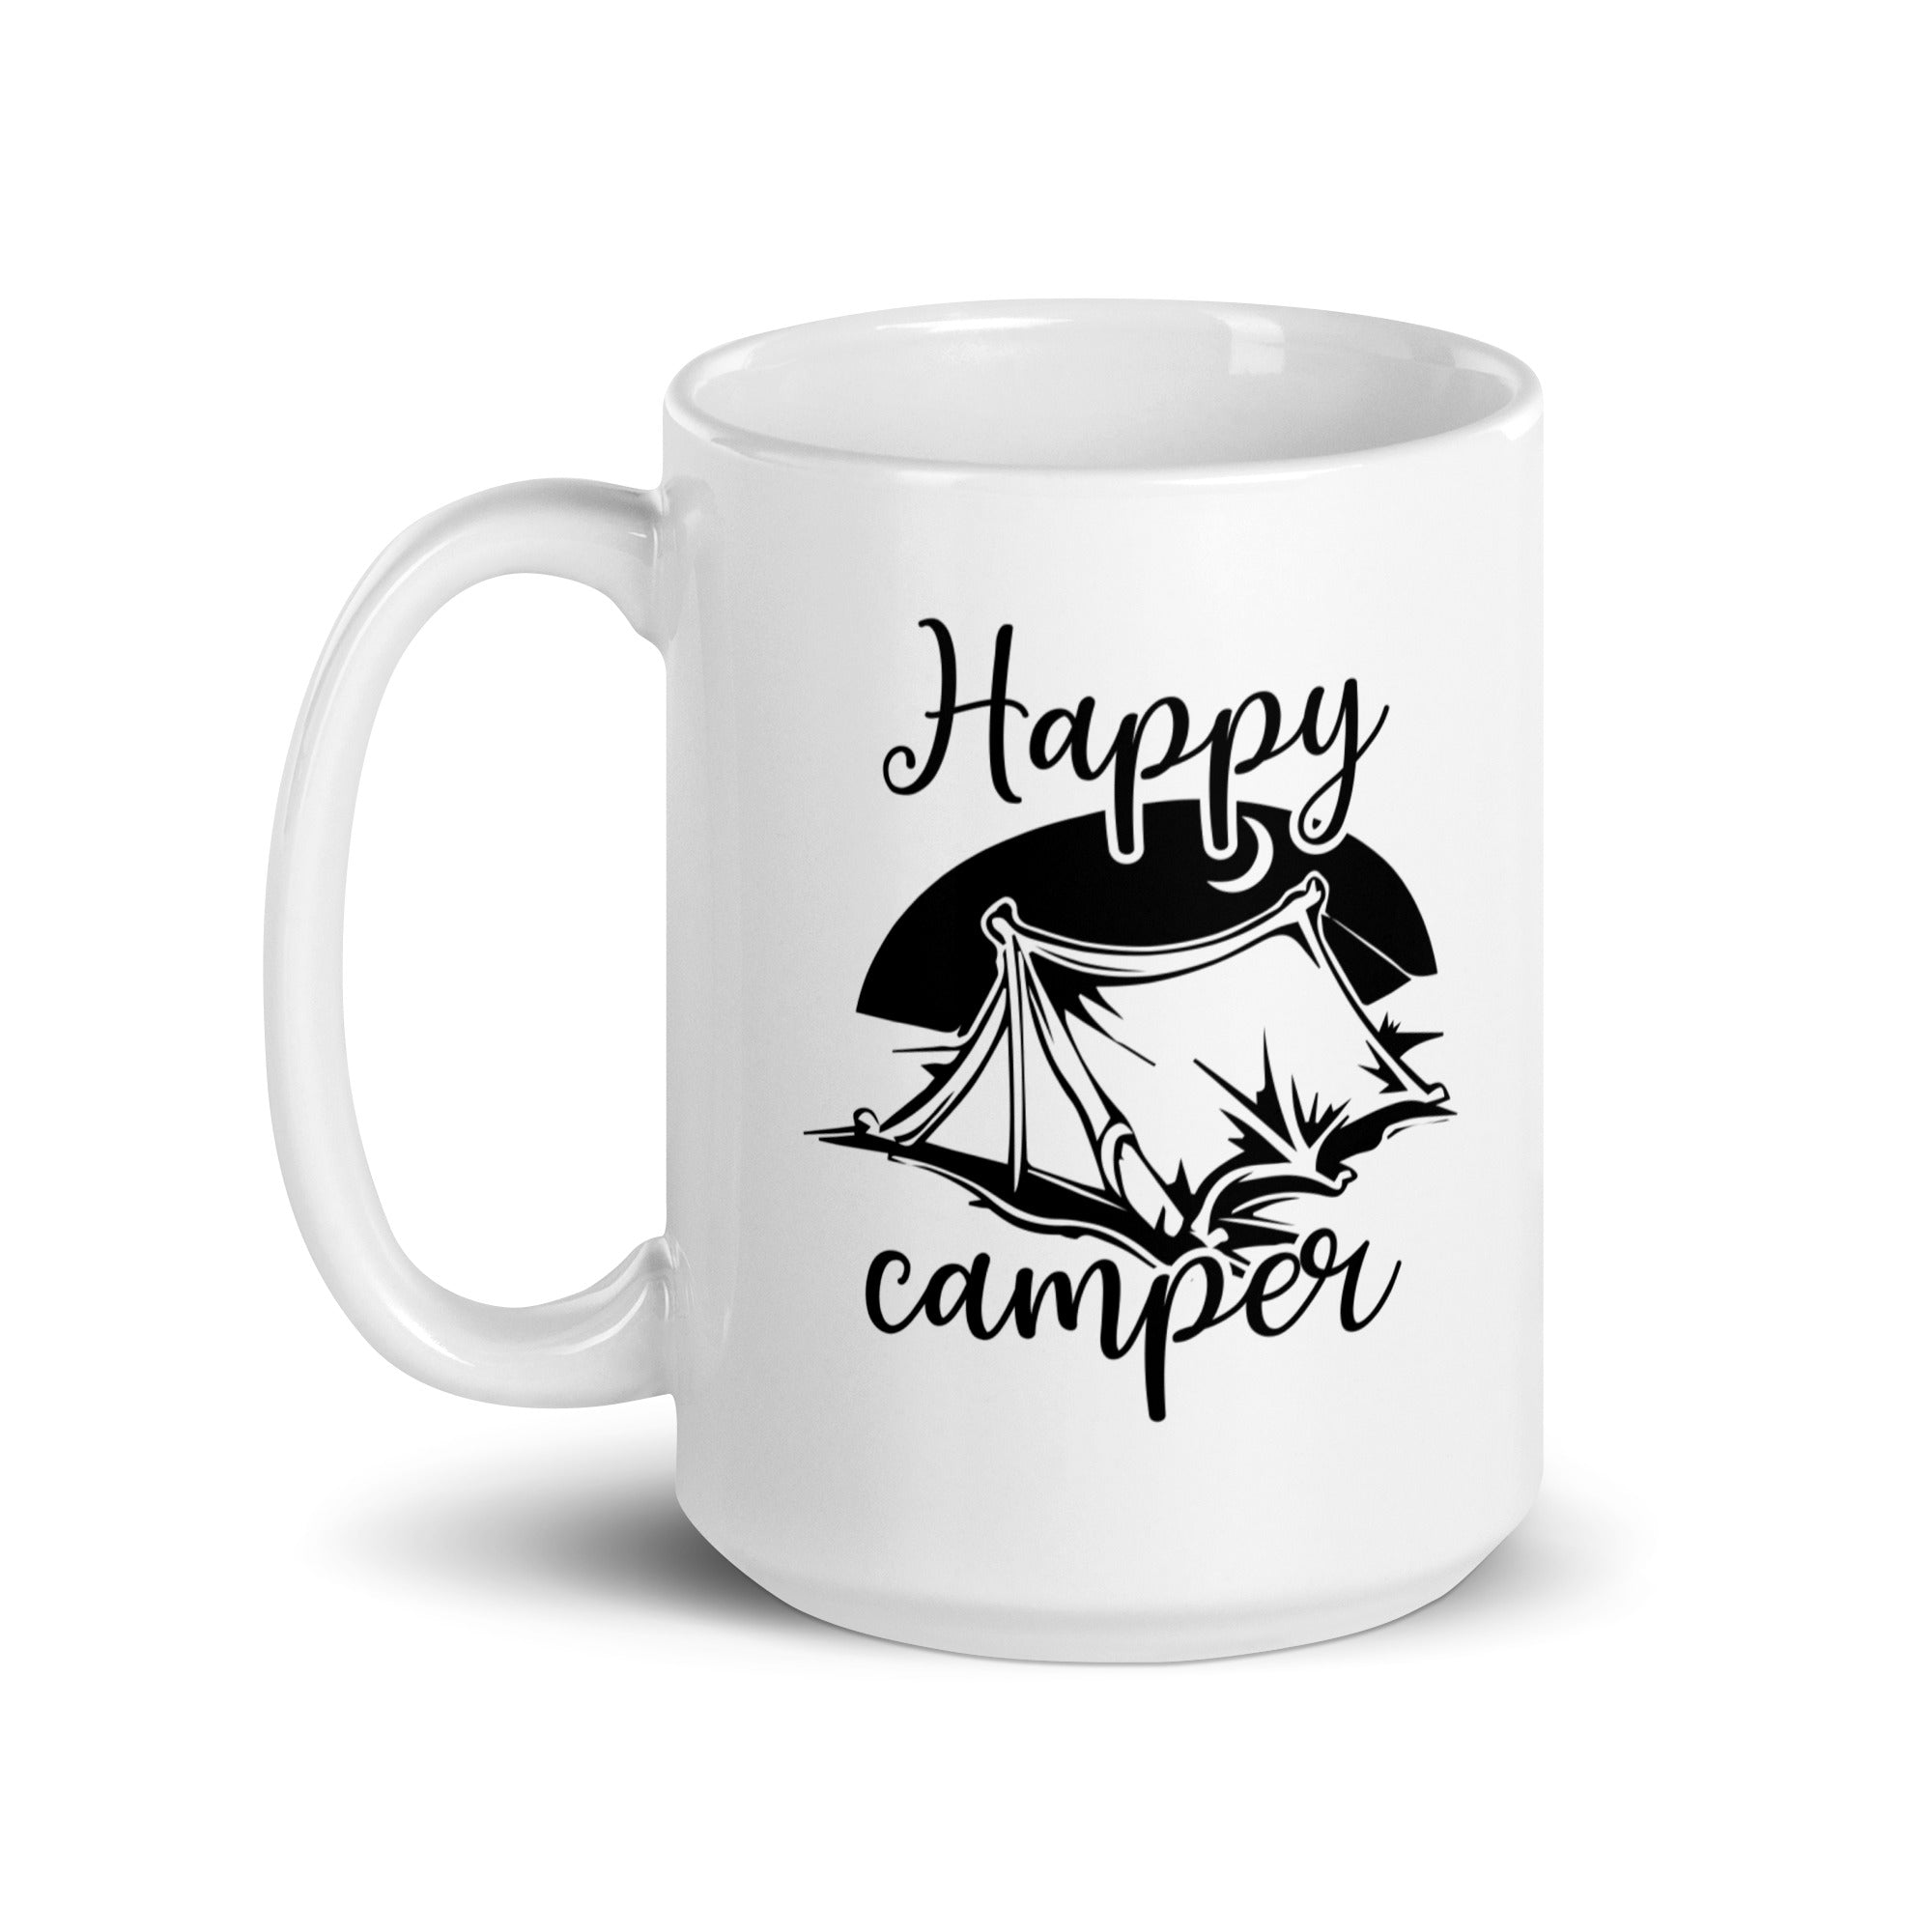 Happy Camper - Mug